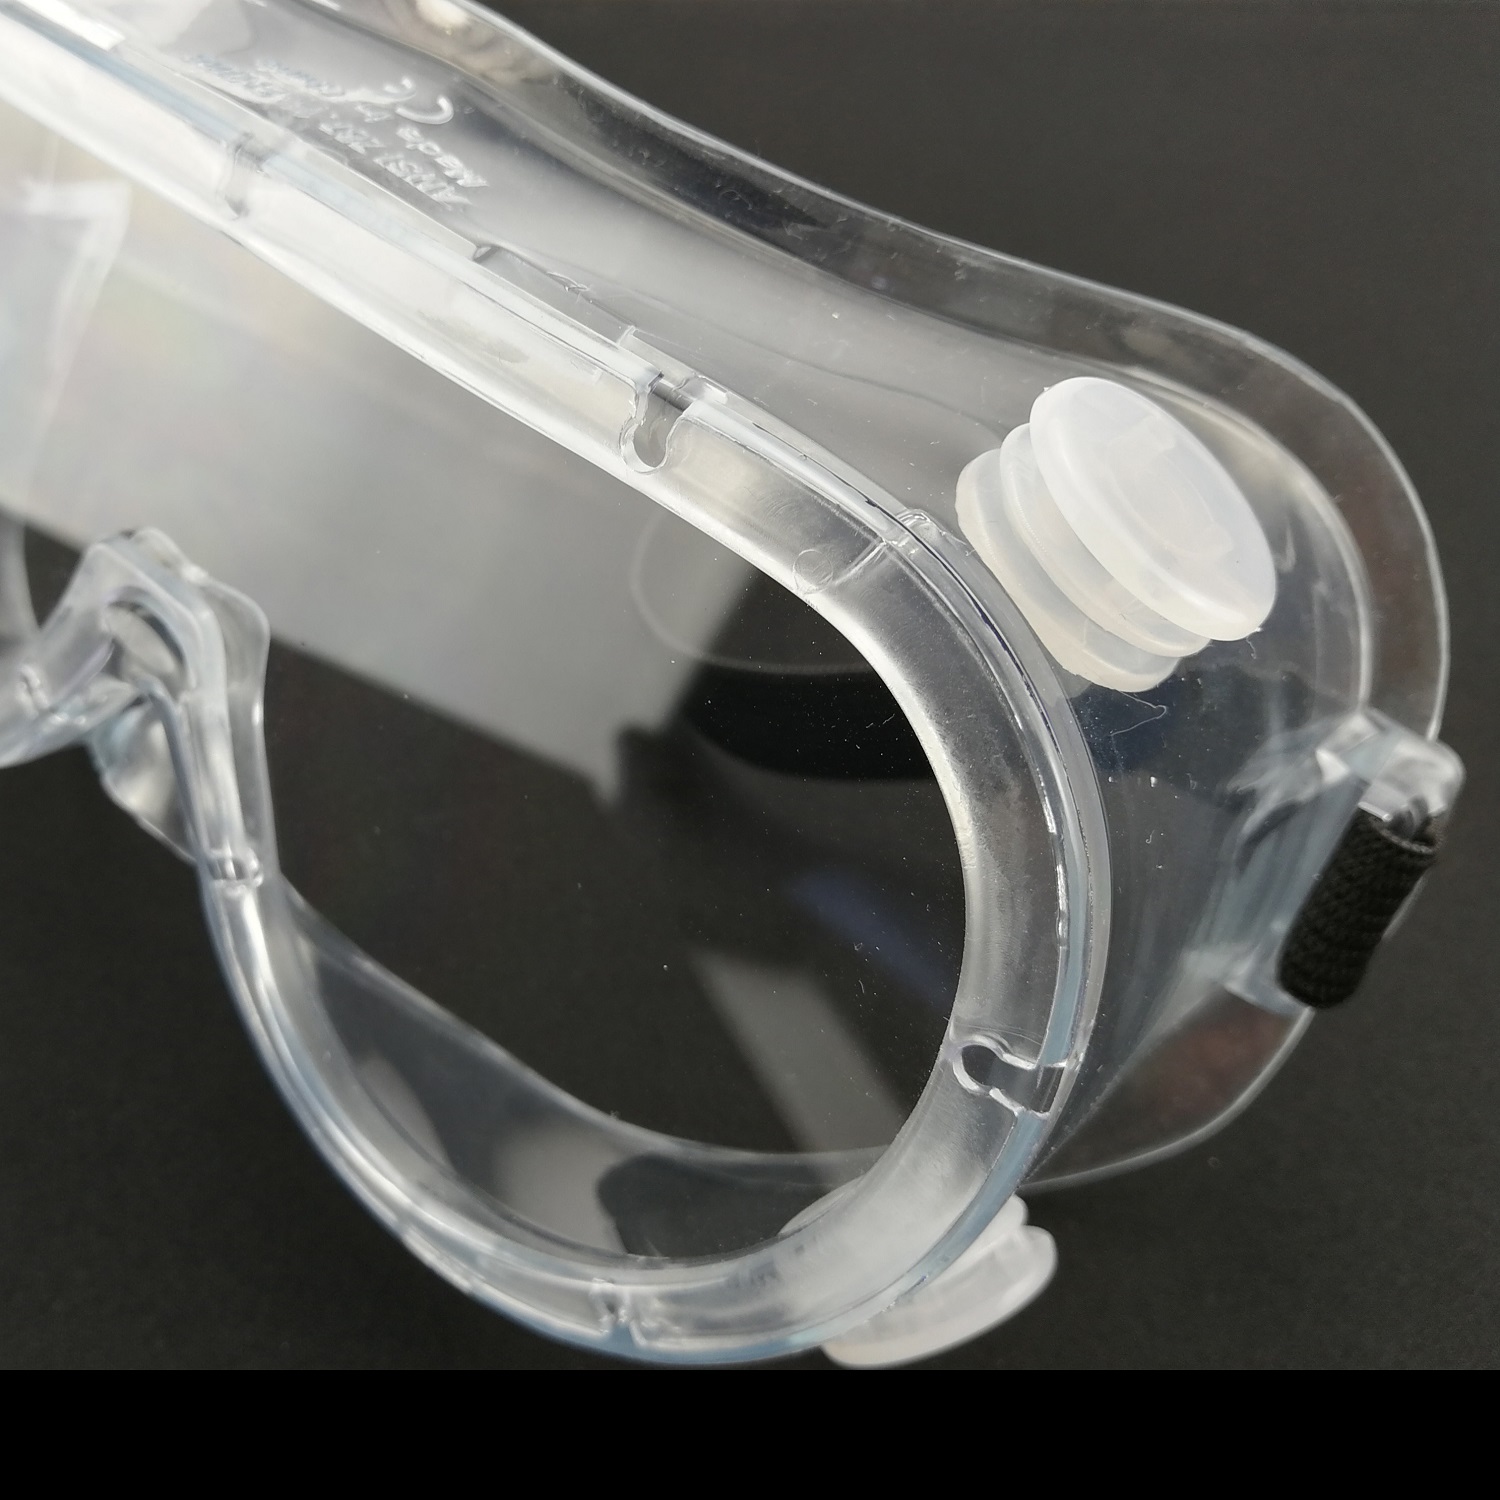 industrial eye protection goggles manufacturer, wholesaler